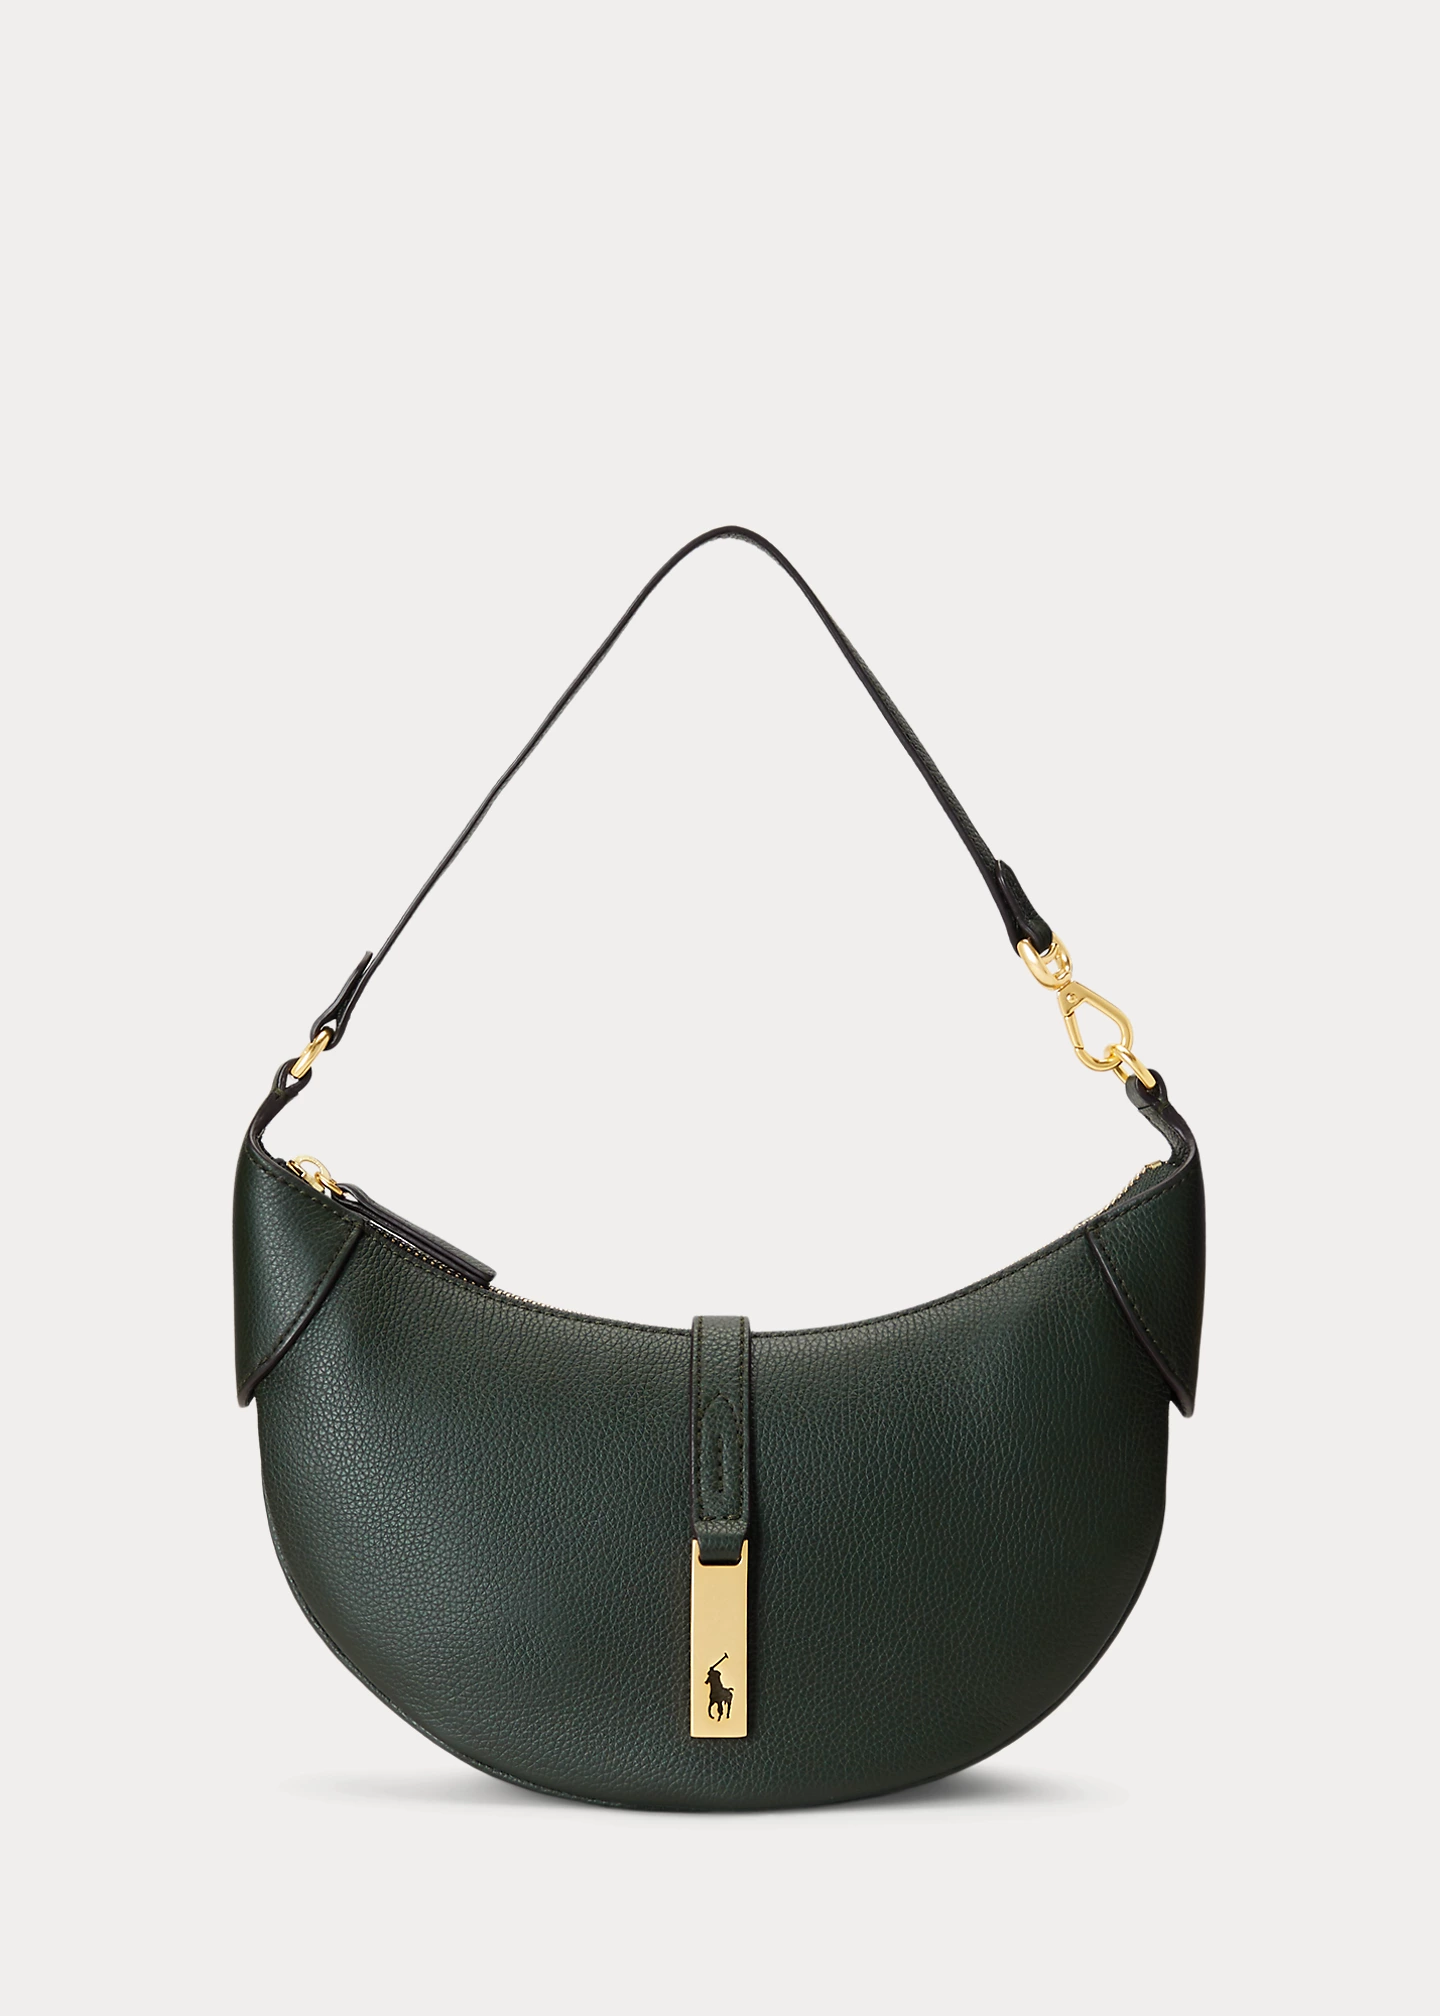 stylish handbags handbags Shoulder Bags